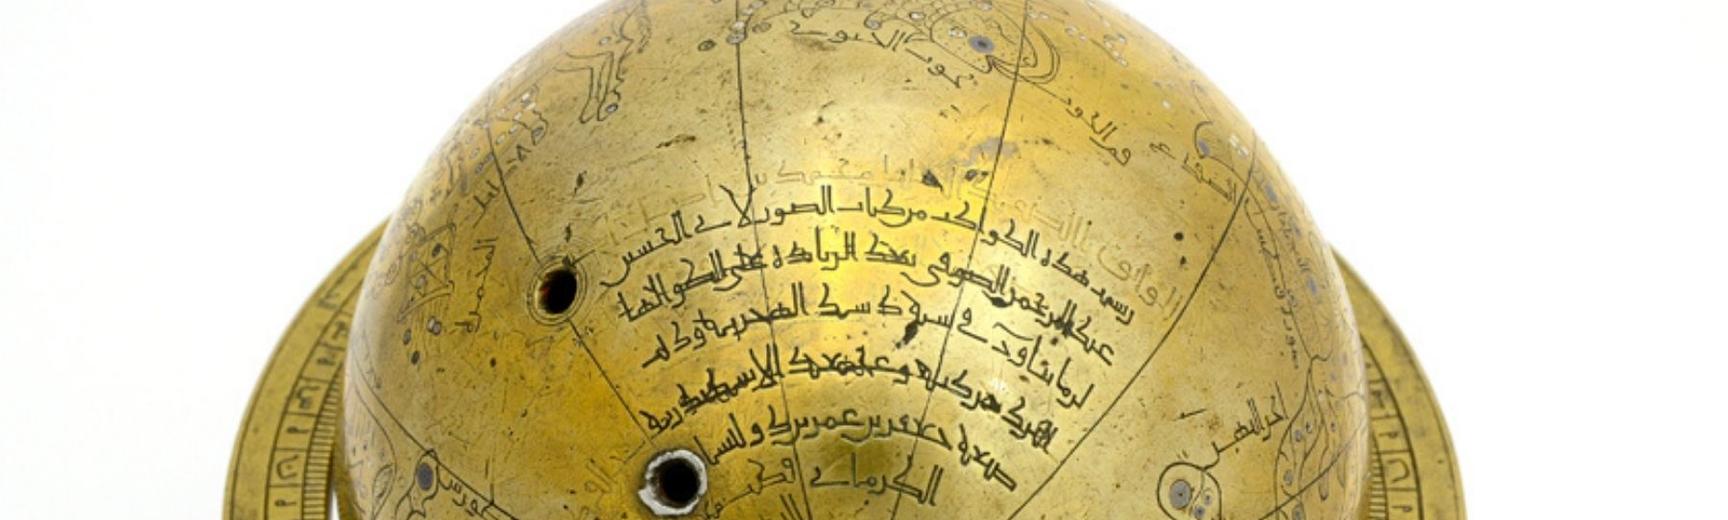 44790 Celestial Globe by Jafar ibn Umar ibn Dawlatshah al Kirmani, Persian 1362/3